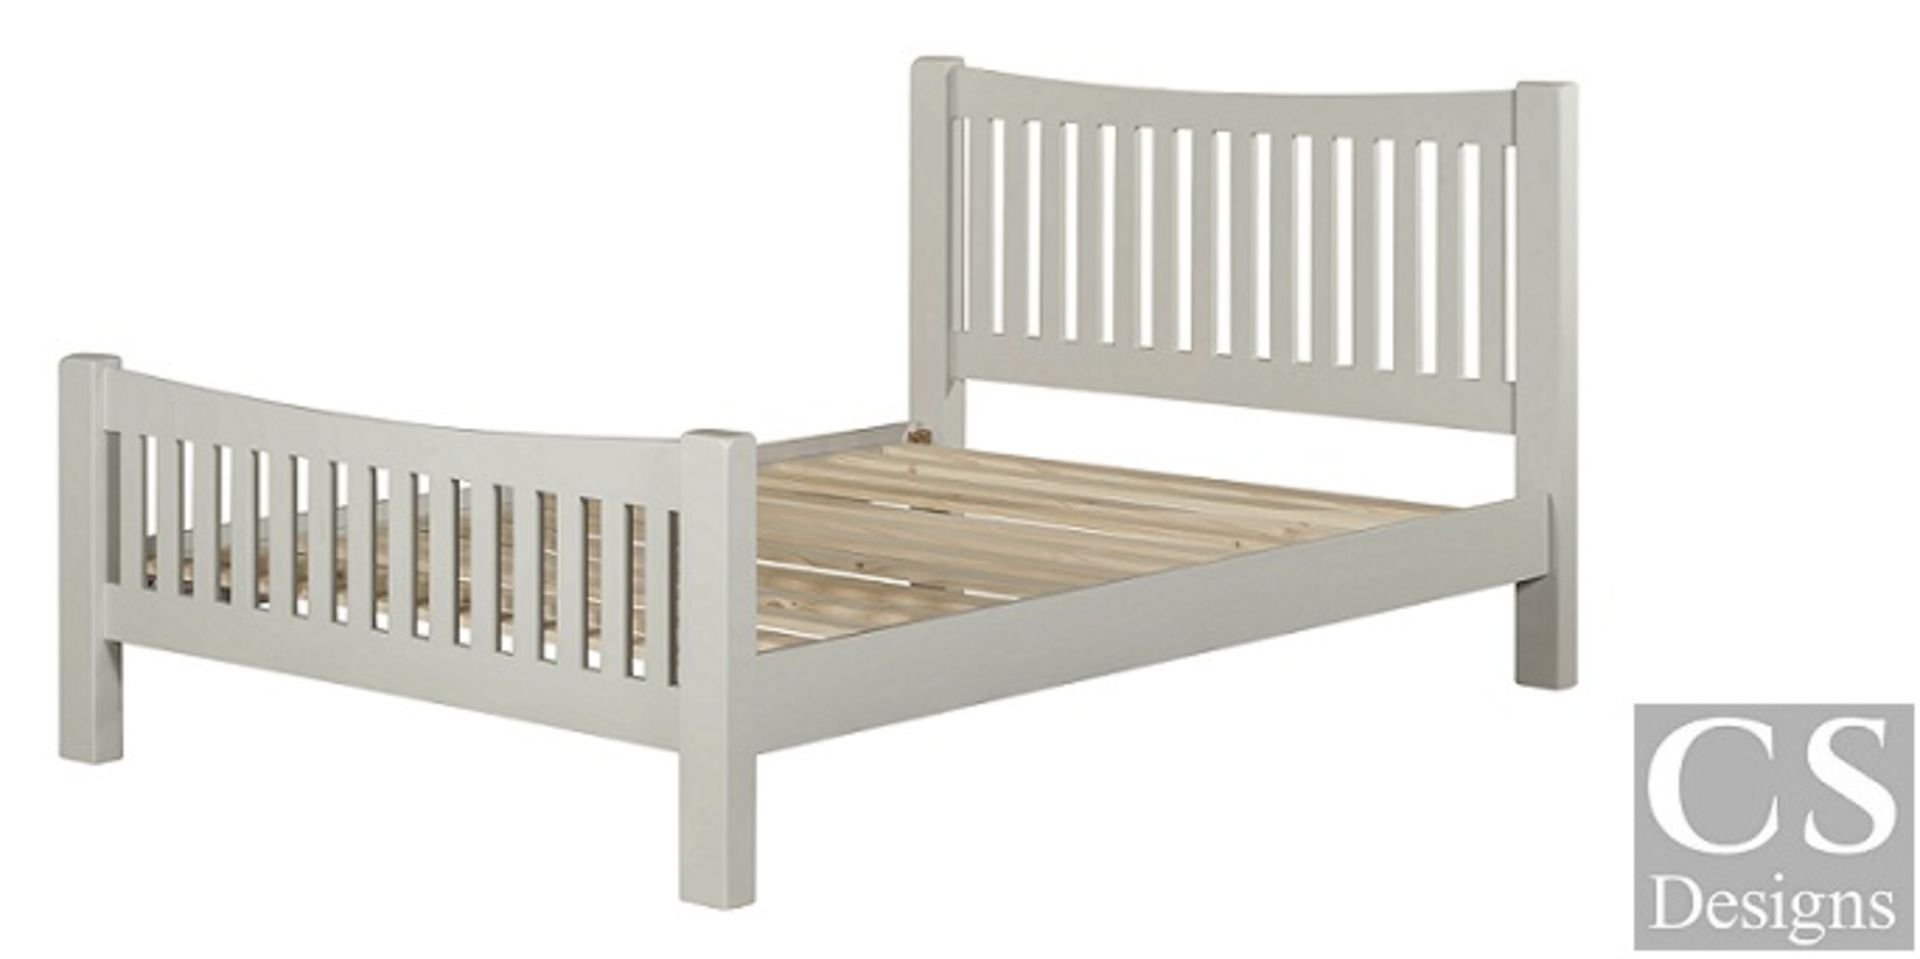 + VAT Brand New CS Designs "Daylesford" King Size Bed Frame With Natural Oak & Solid Hardwood